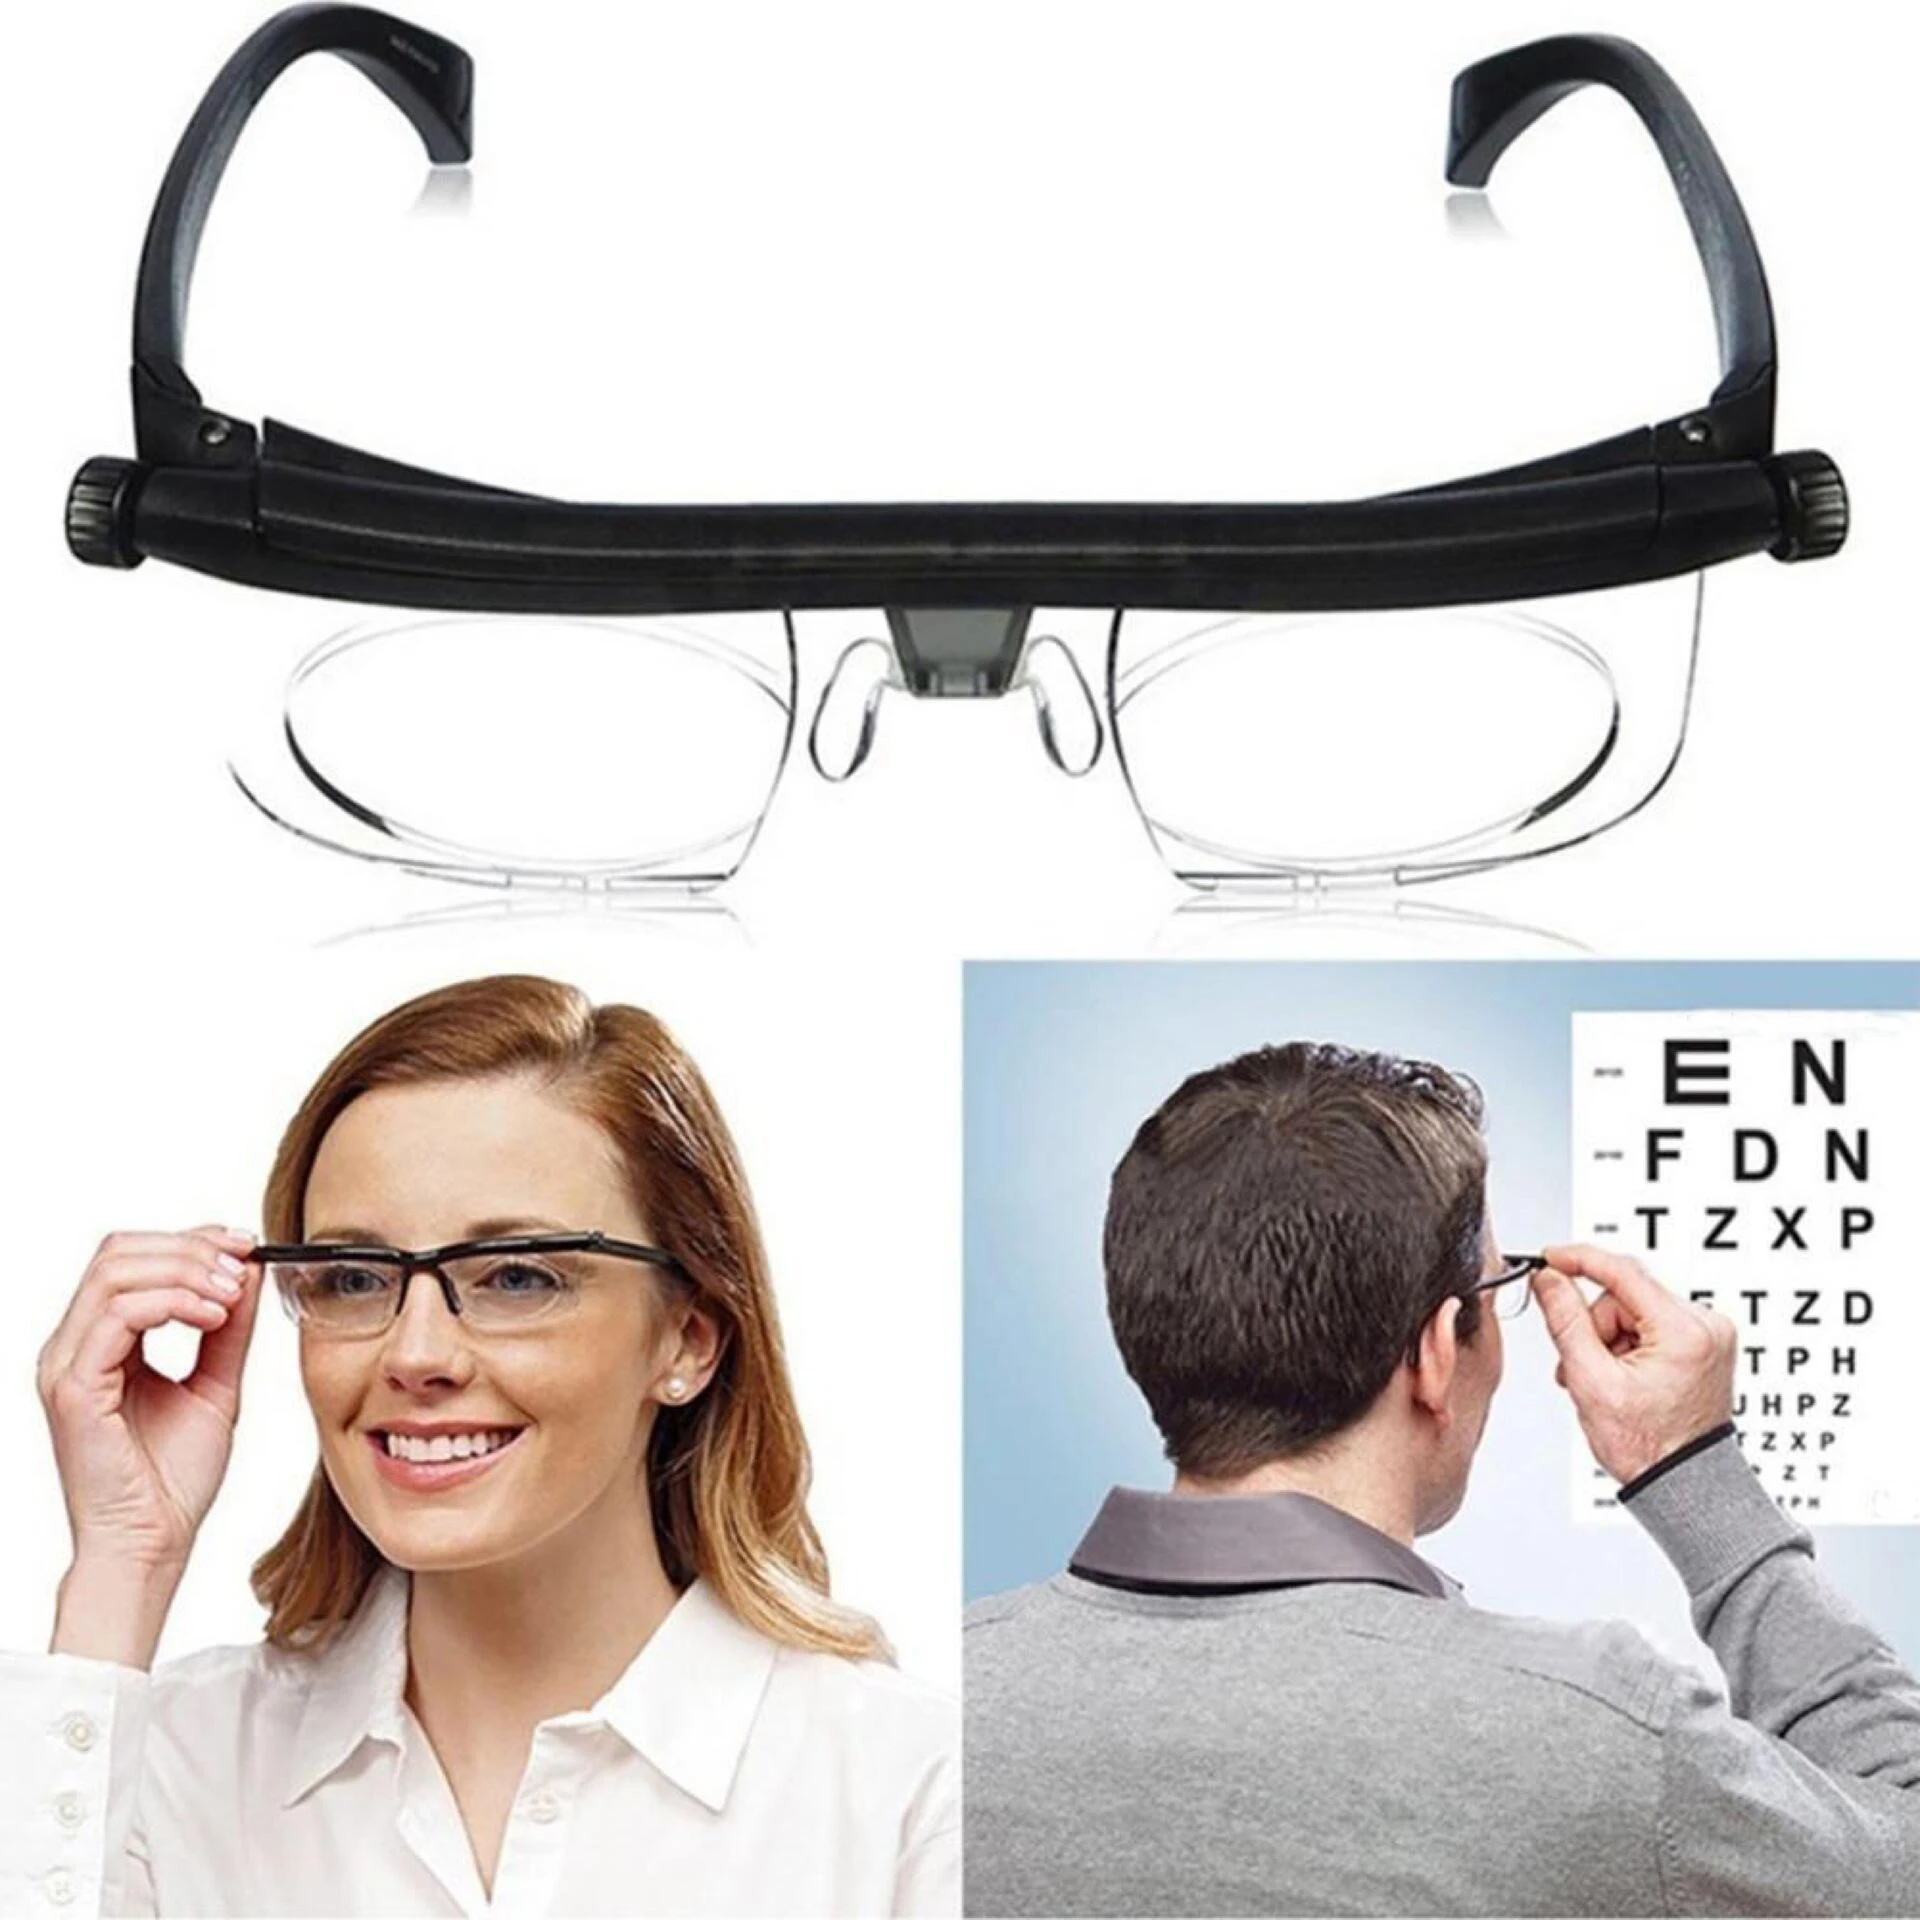 

Hot Sale Popular Adjustable Vision Focus TR90 Myopia Eye Glasses -4D to +5D Eyeglasses Reading Eye Glasses